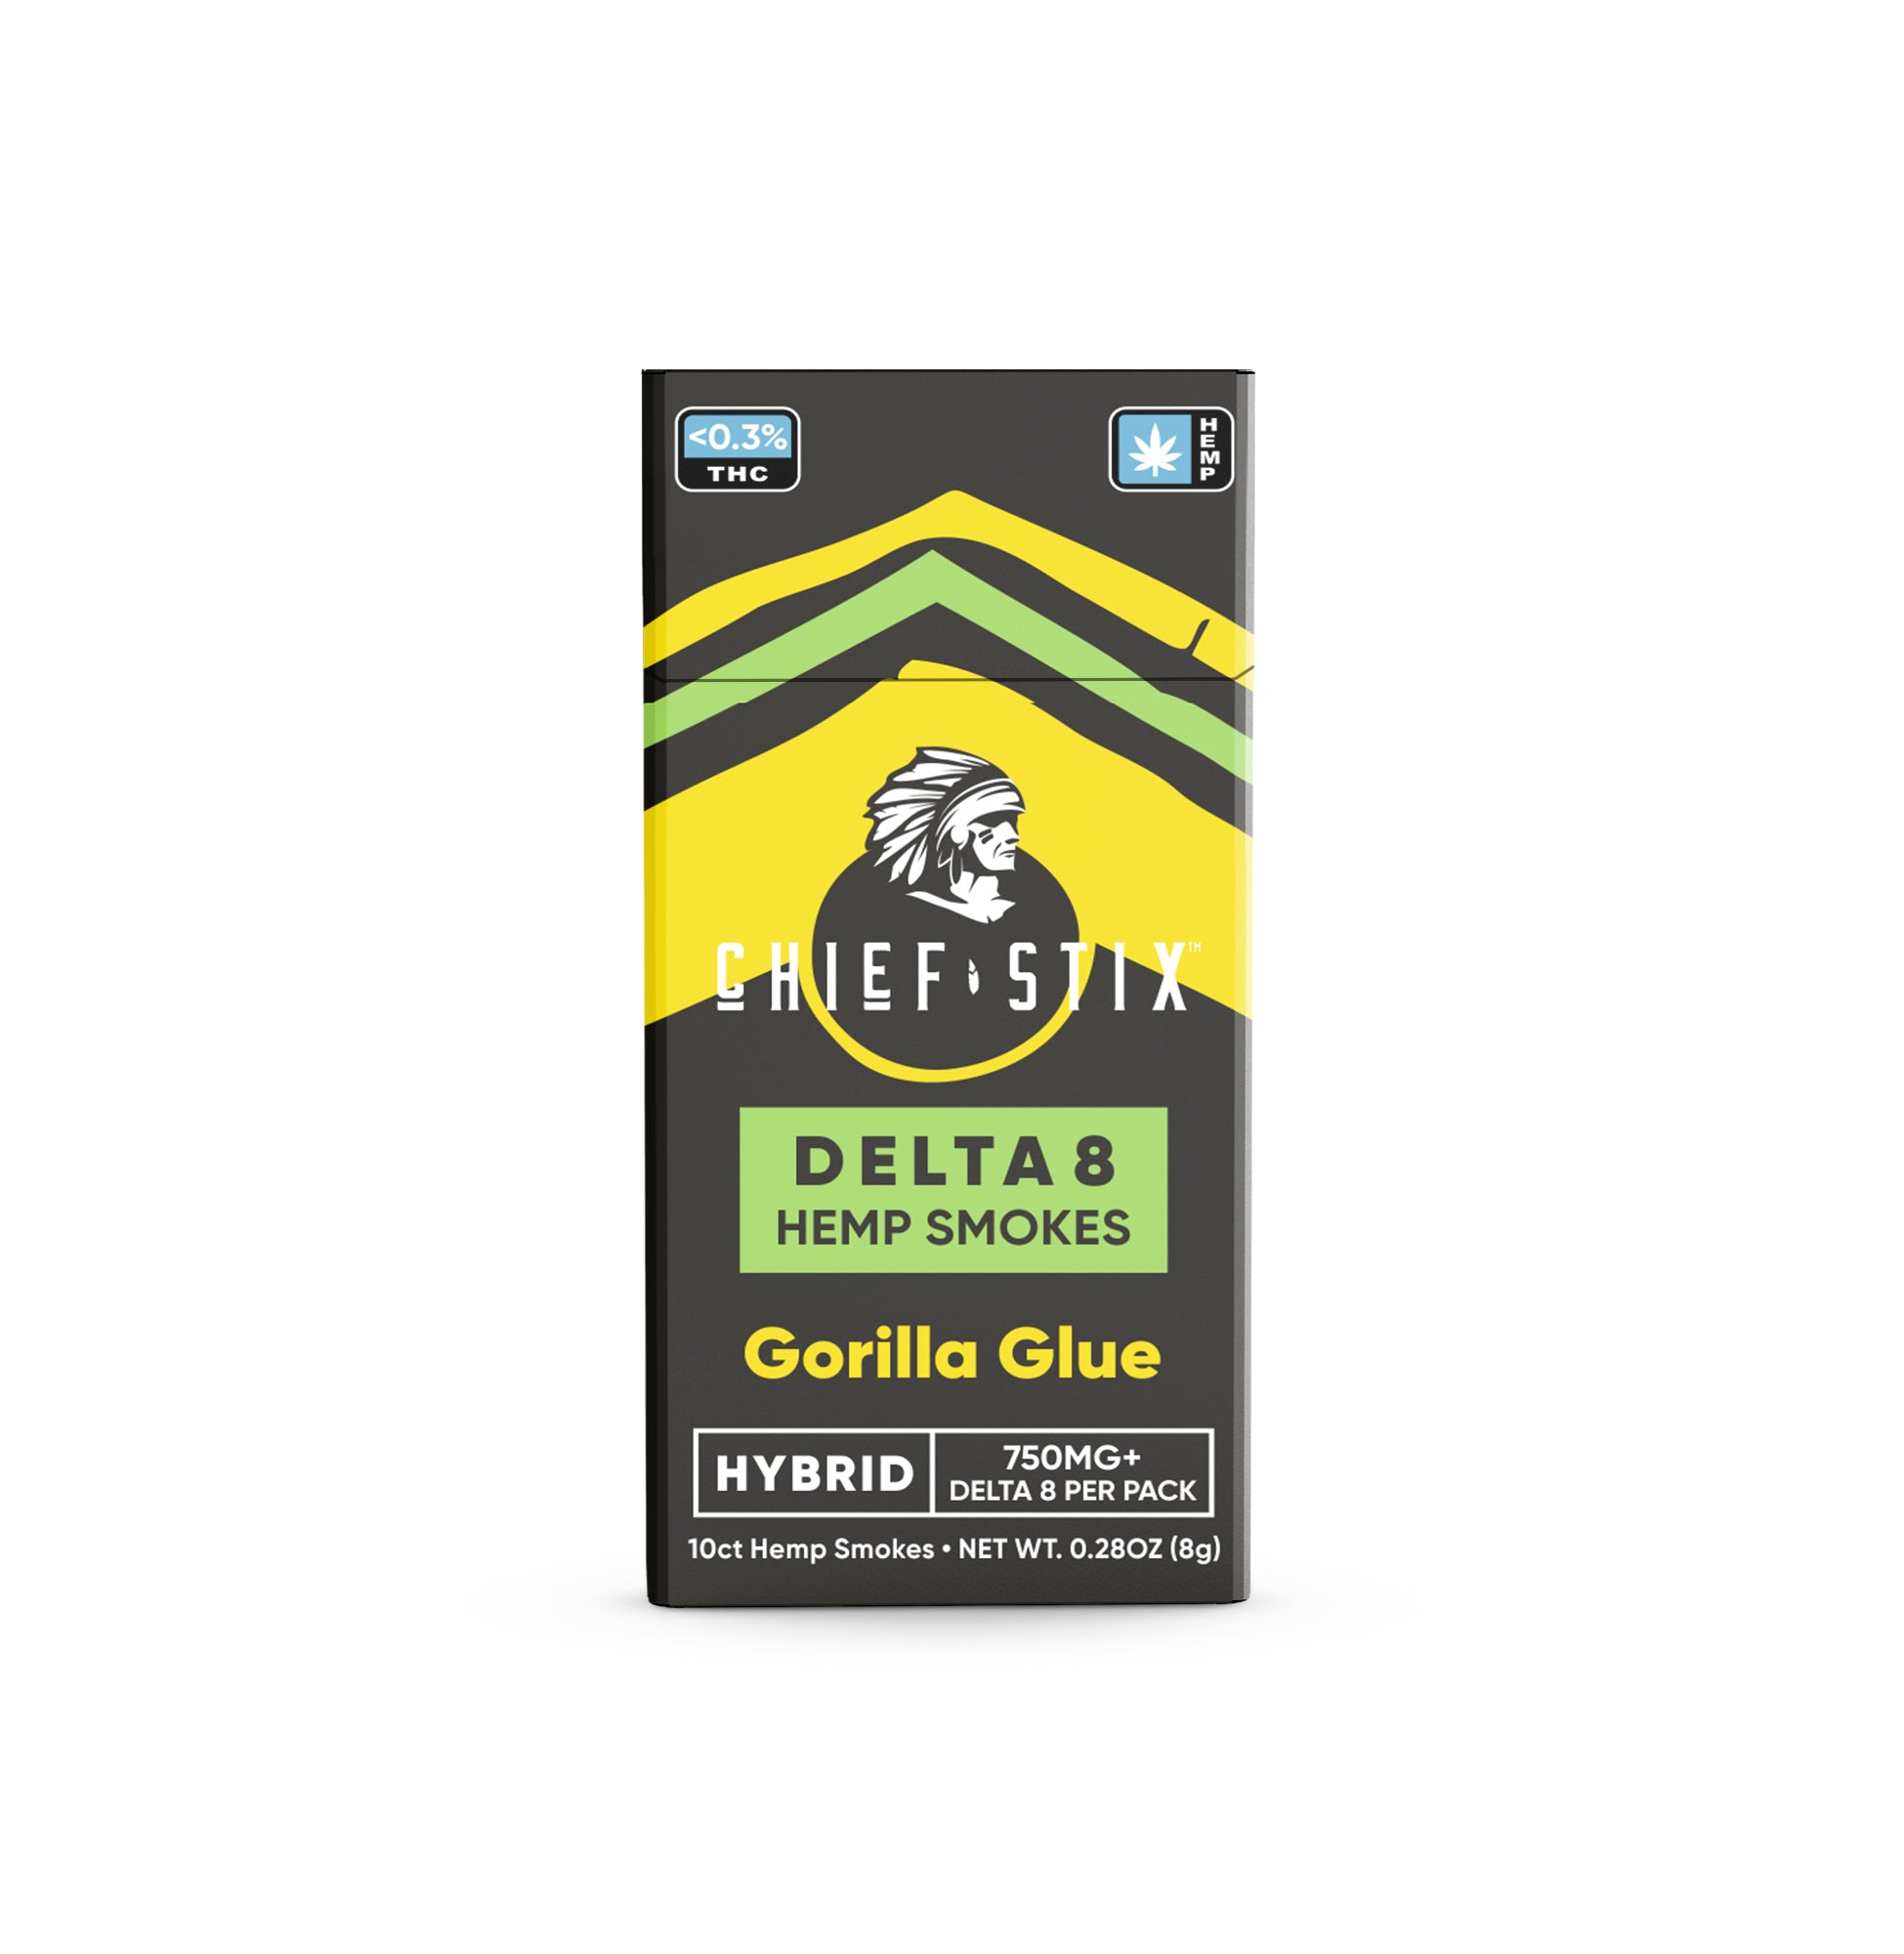 Chief Stix Delta 8 Hemp Smokes - Hybrid Gorilla Glue (10ct - 750mg Per Pack)